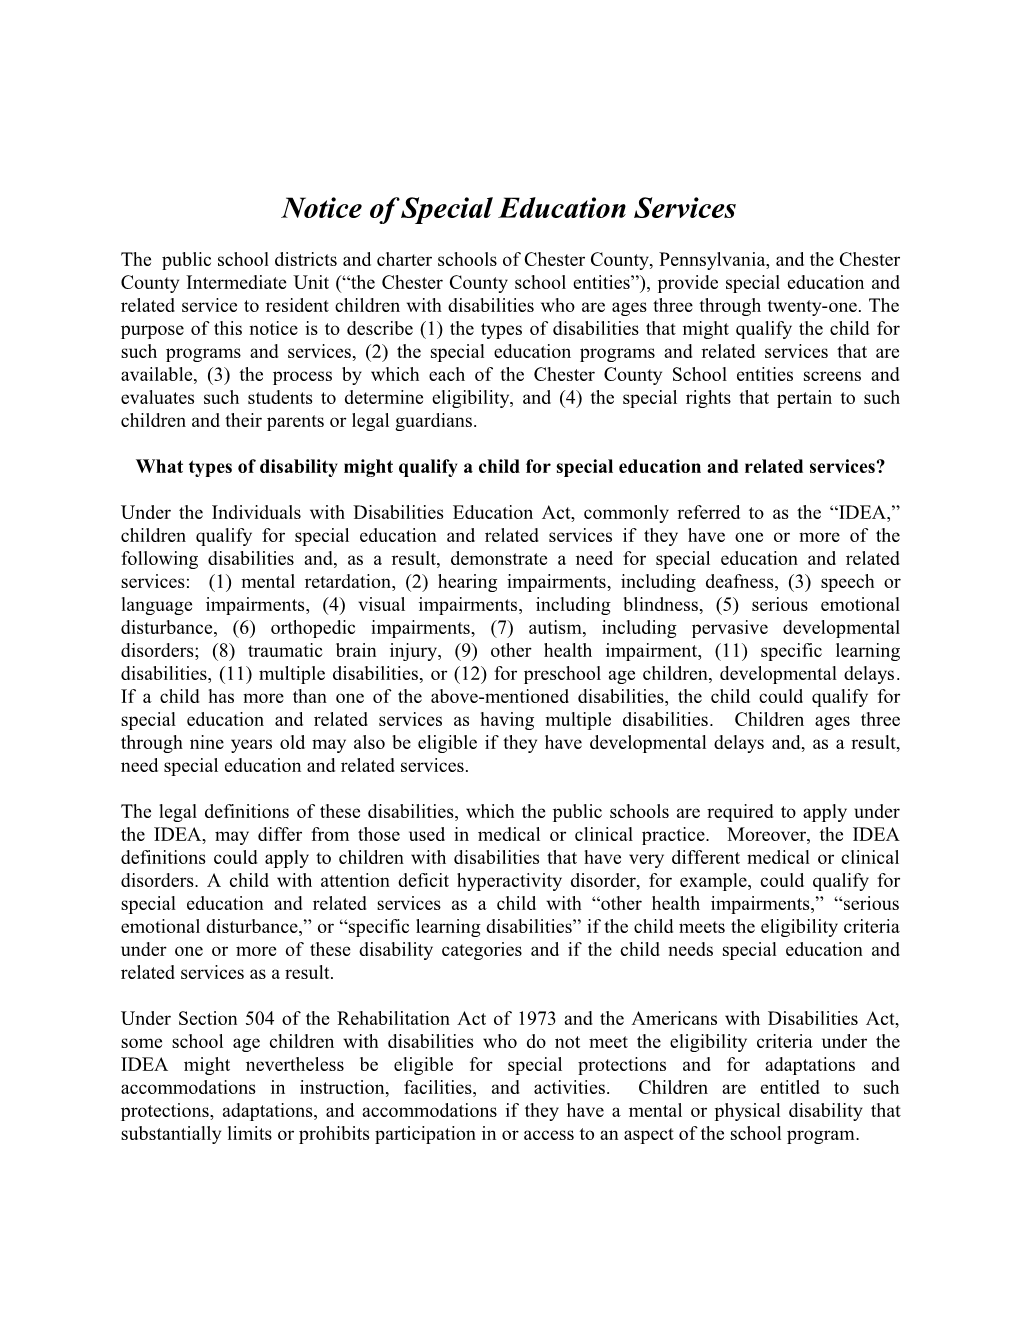 Special Education Notice 2008-R (D269490:1)